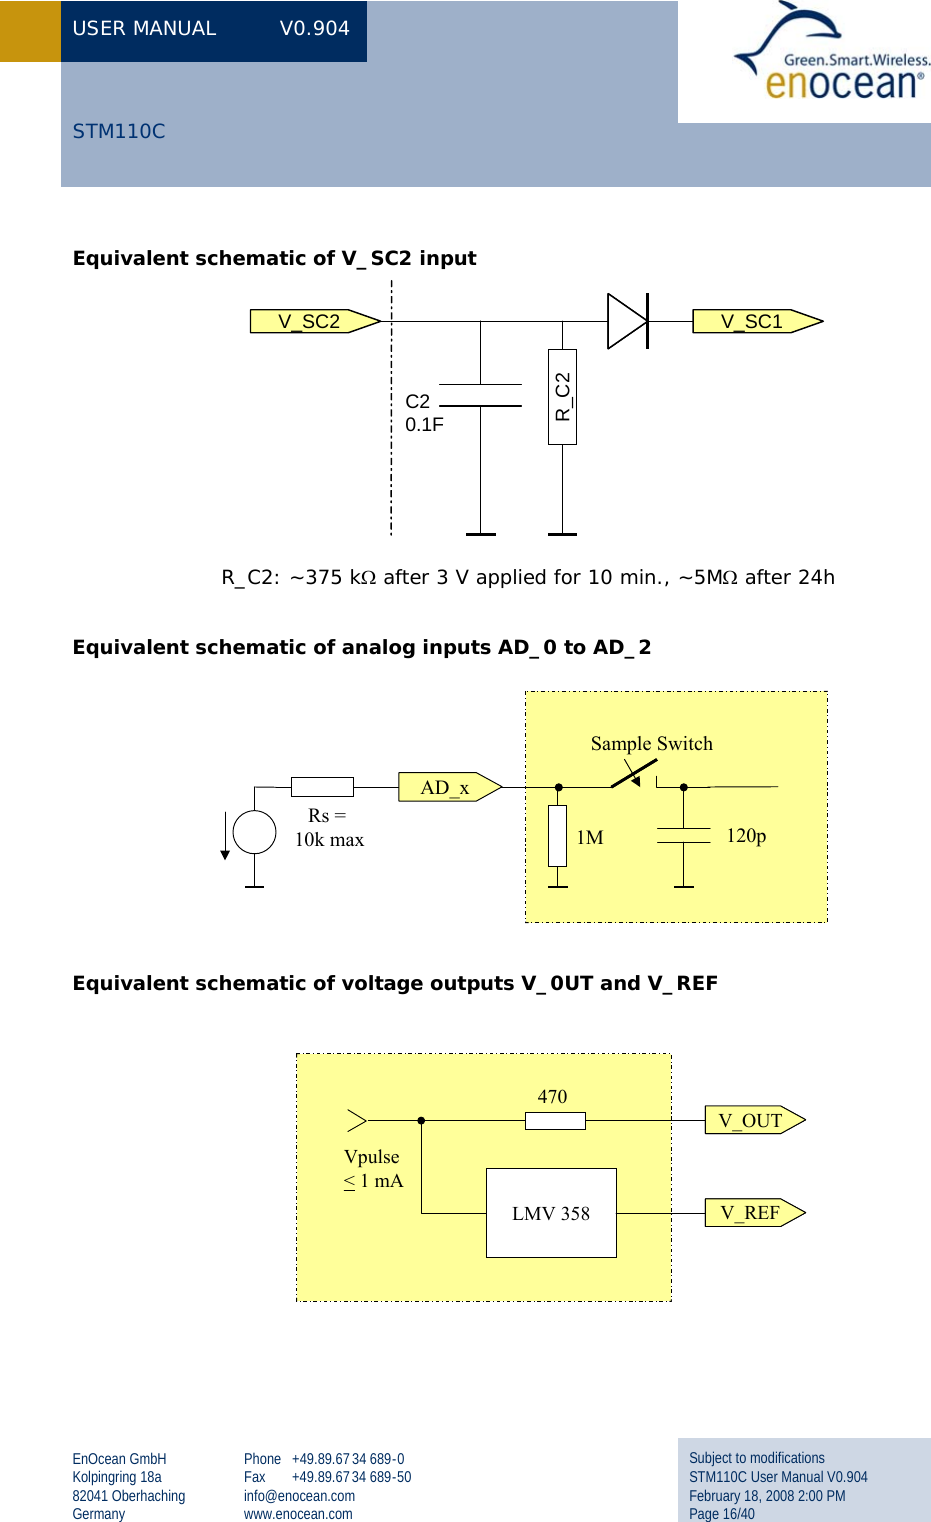 USER MANUAL  V0.904 EnOcean GmbH Kolpingring 18a 82041 Oberhaching Germany Phone +49.89.67 34 689-0 Fax +49.89.67 34 689-50 info@enocean.com www.enocean.com Subject to modifications STM110C User Manual V0.904 February 18, 2008 2:00 PM Page 16/40  STM110C Equivalent schematic of V_SC2 input  R_C2: ~375 kΩ after 3 V applied for 10 min., ~5MΩ after 24h  Equivalent schematic of analog inputs AD_0 to AD_2   Equivalent schematic of voltage outputs V_0UT and V_REF  V_SC2C20.1FR_C2V_SC11M 120pSample SwitchRs = 10k maxAD_xV_OUTV_REFLMV 358470Vpulse&lt;1 mAV_OUTV_REFLMV 358470Vpulse&lt;1 mA